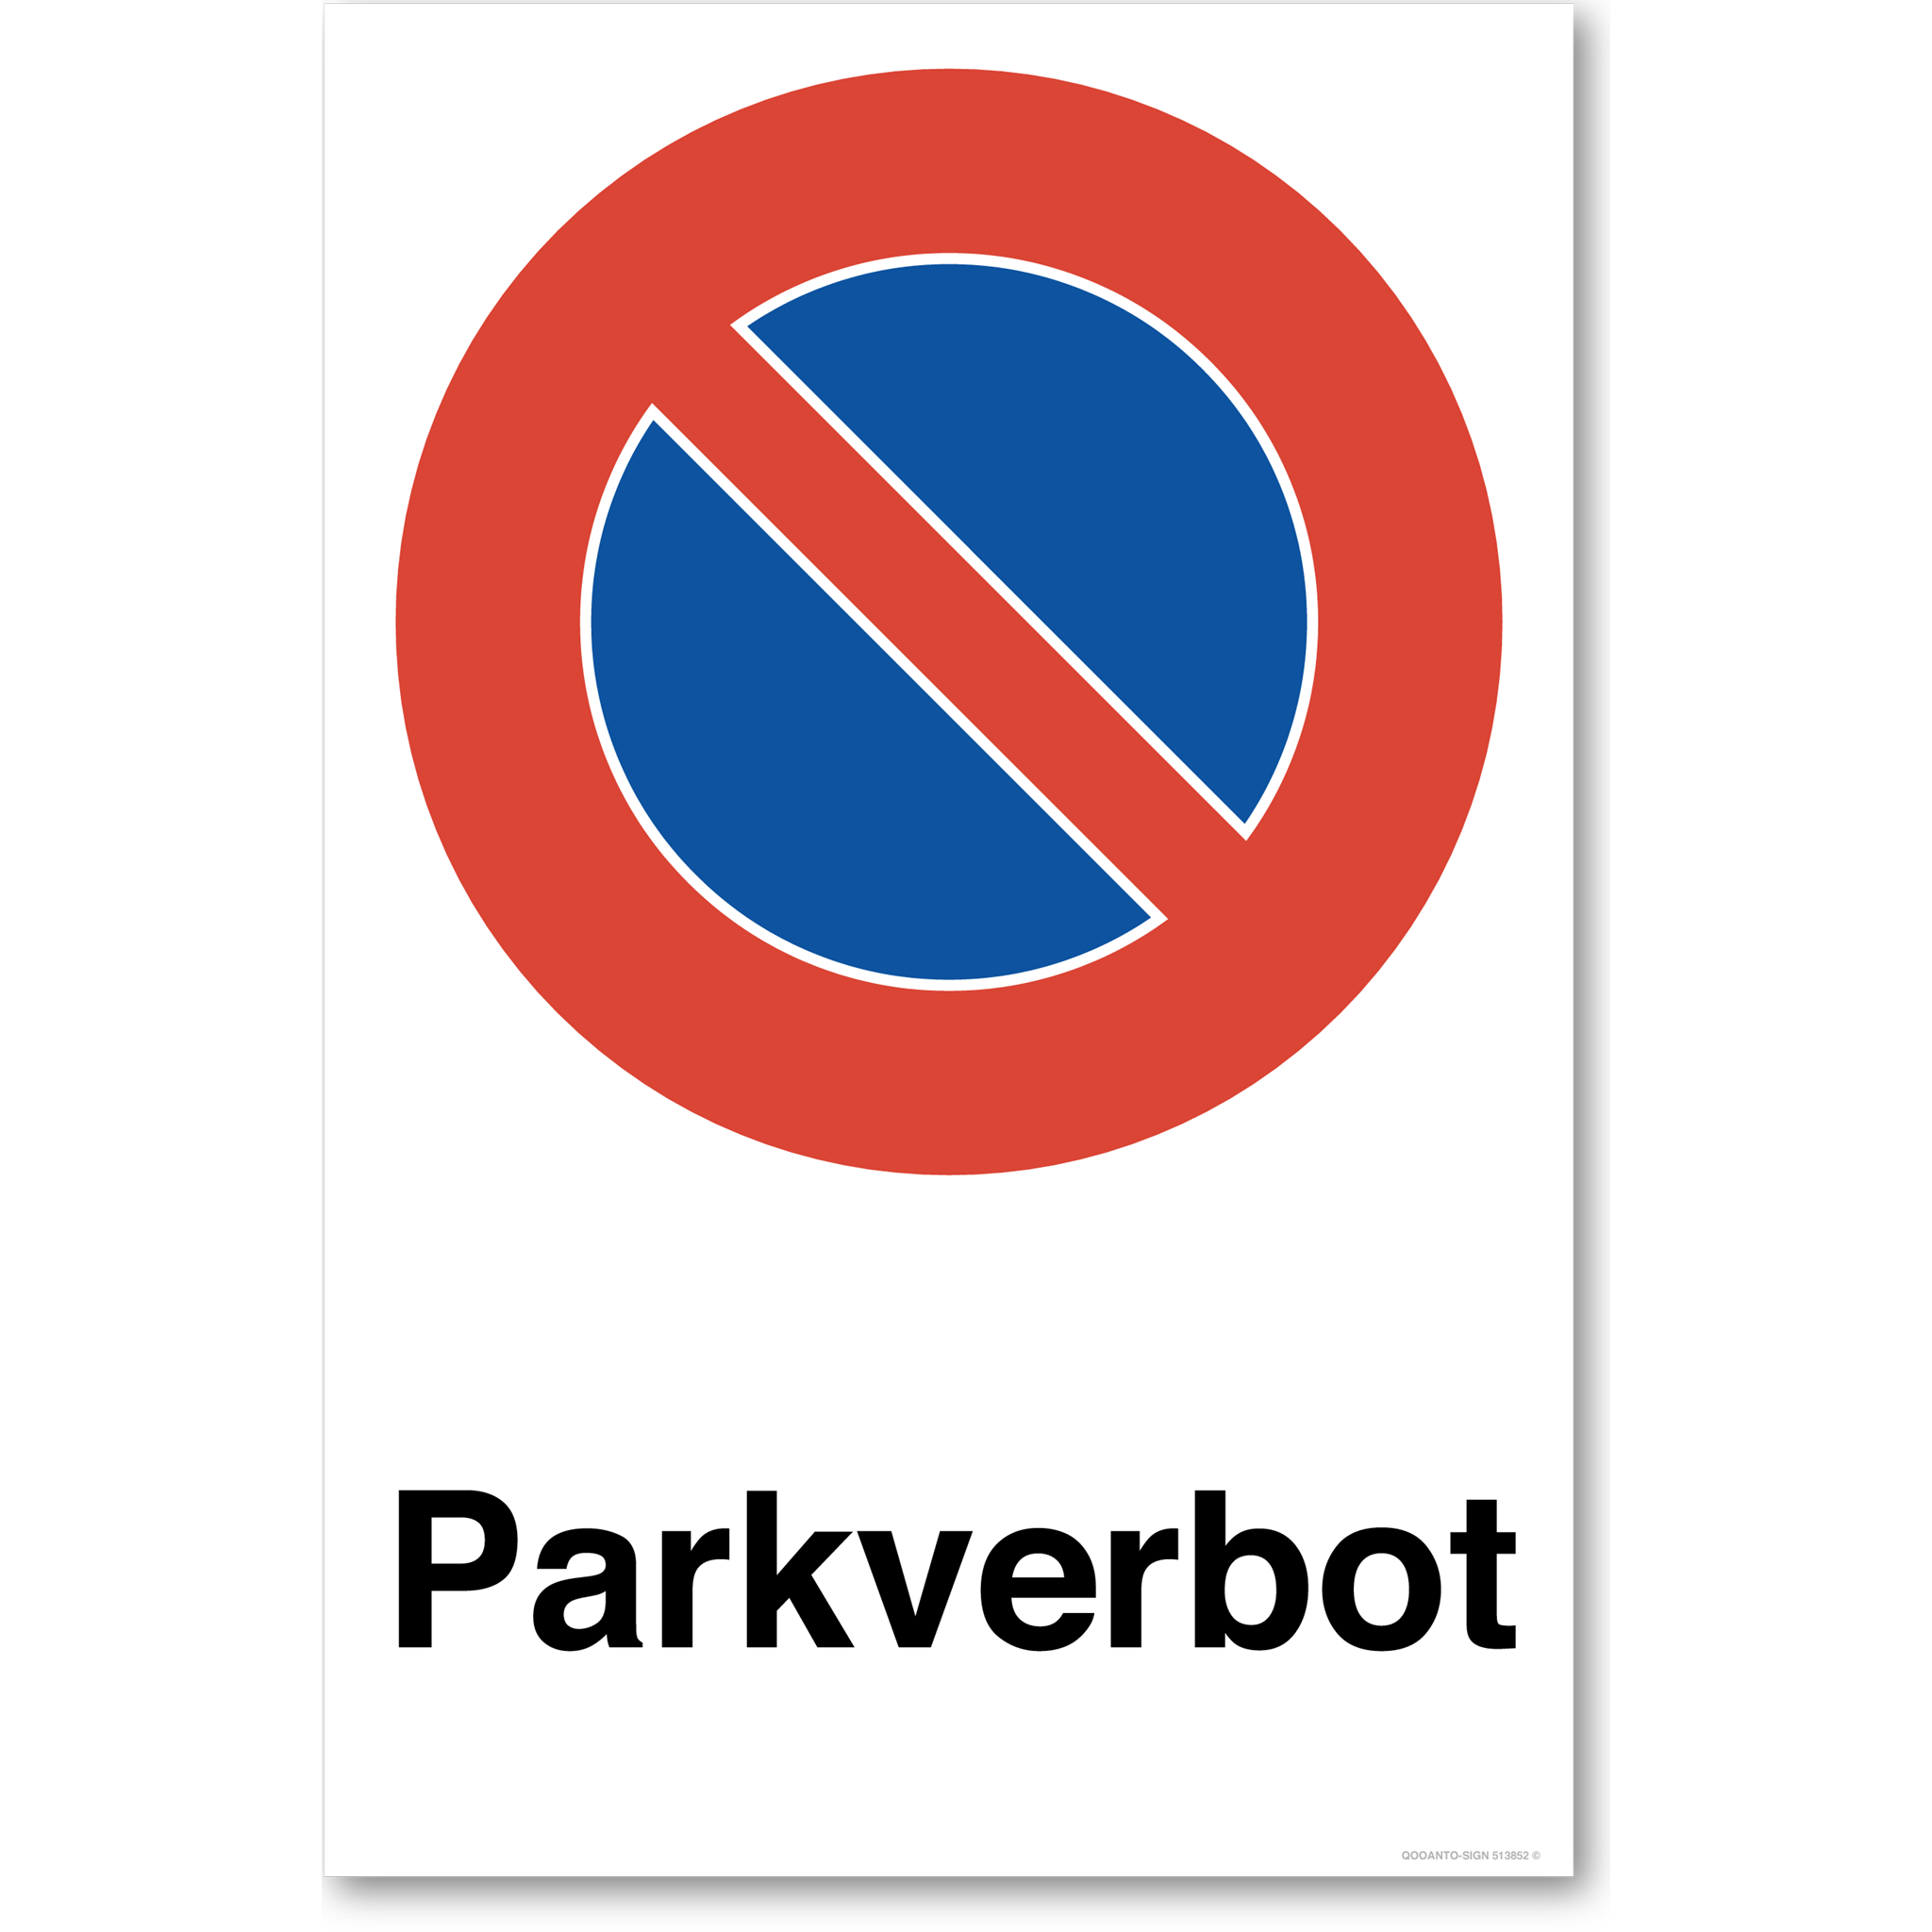 Parkverbot - Parkieren verboten - Parkverbotsschild hochformat